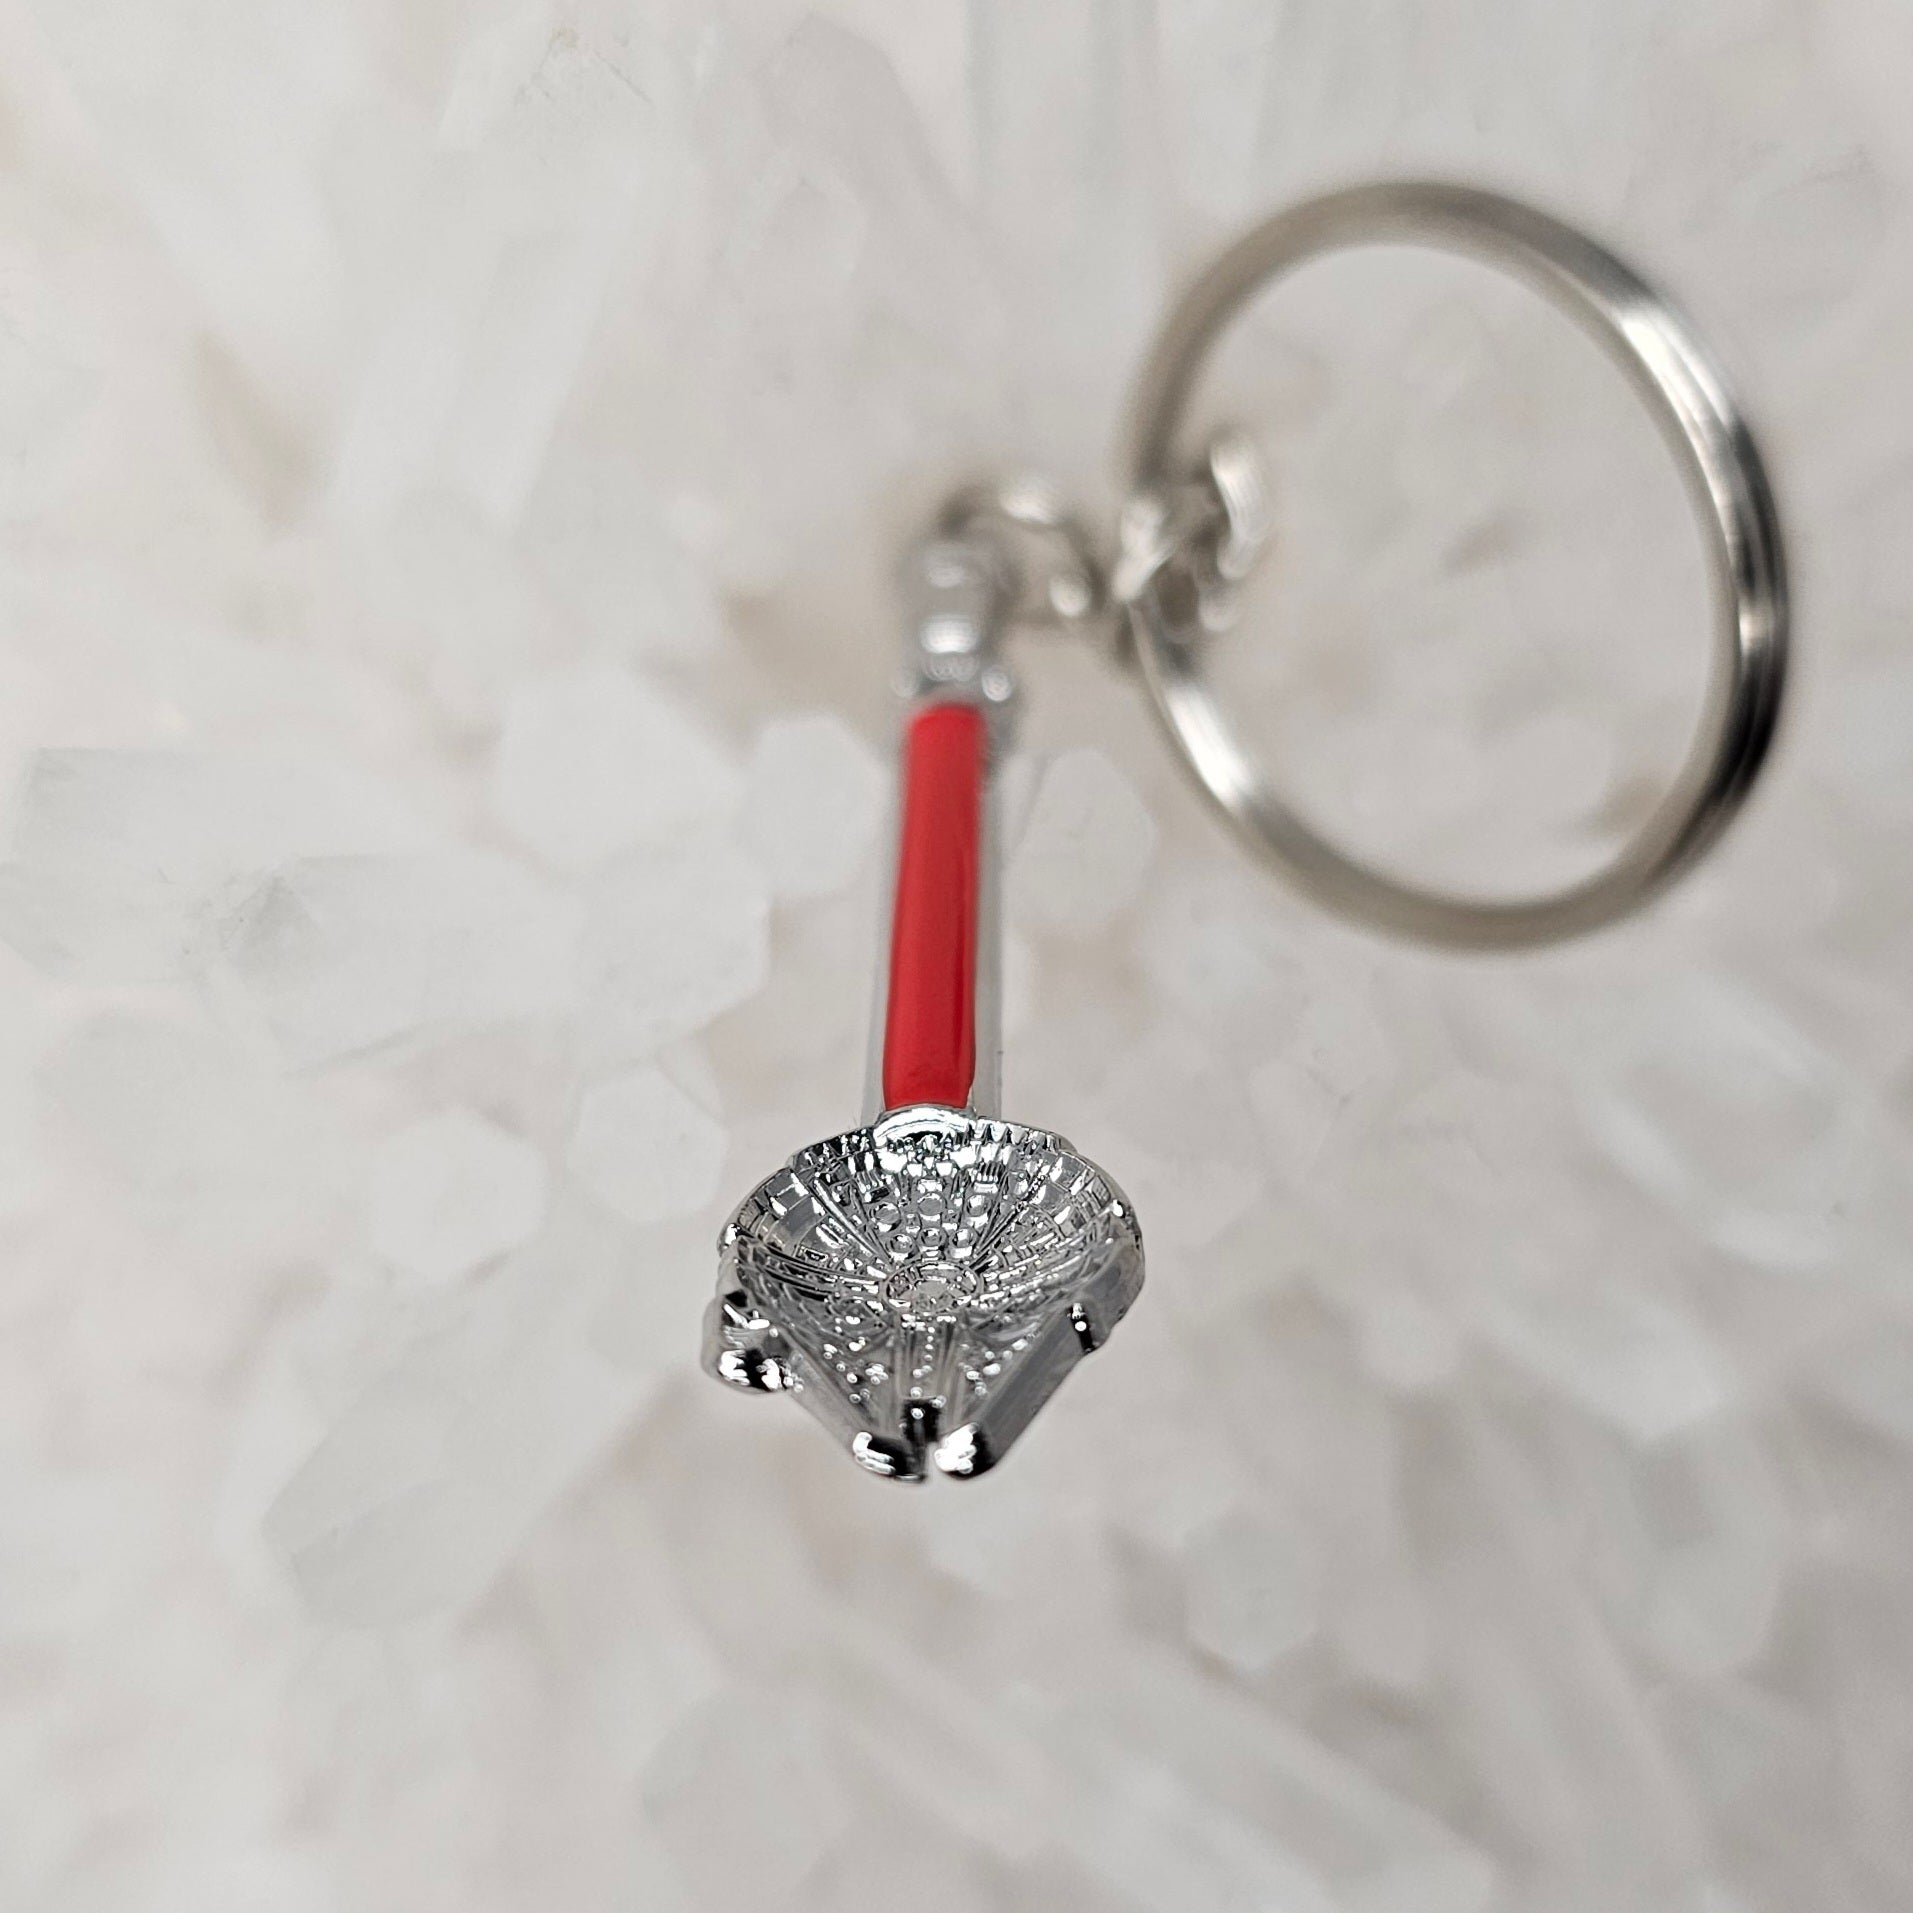 Spoonlenium Falcon Star Spoon Wars Sith Red 3D Metal Mini Spoon Keychains Key-Chain Key Chains